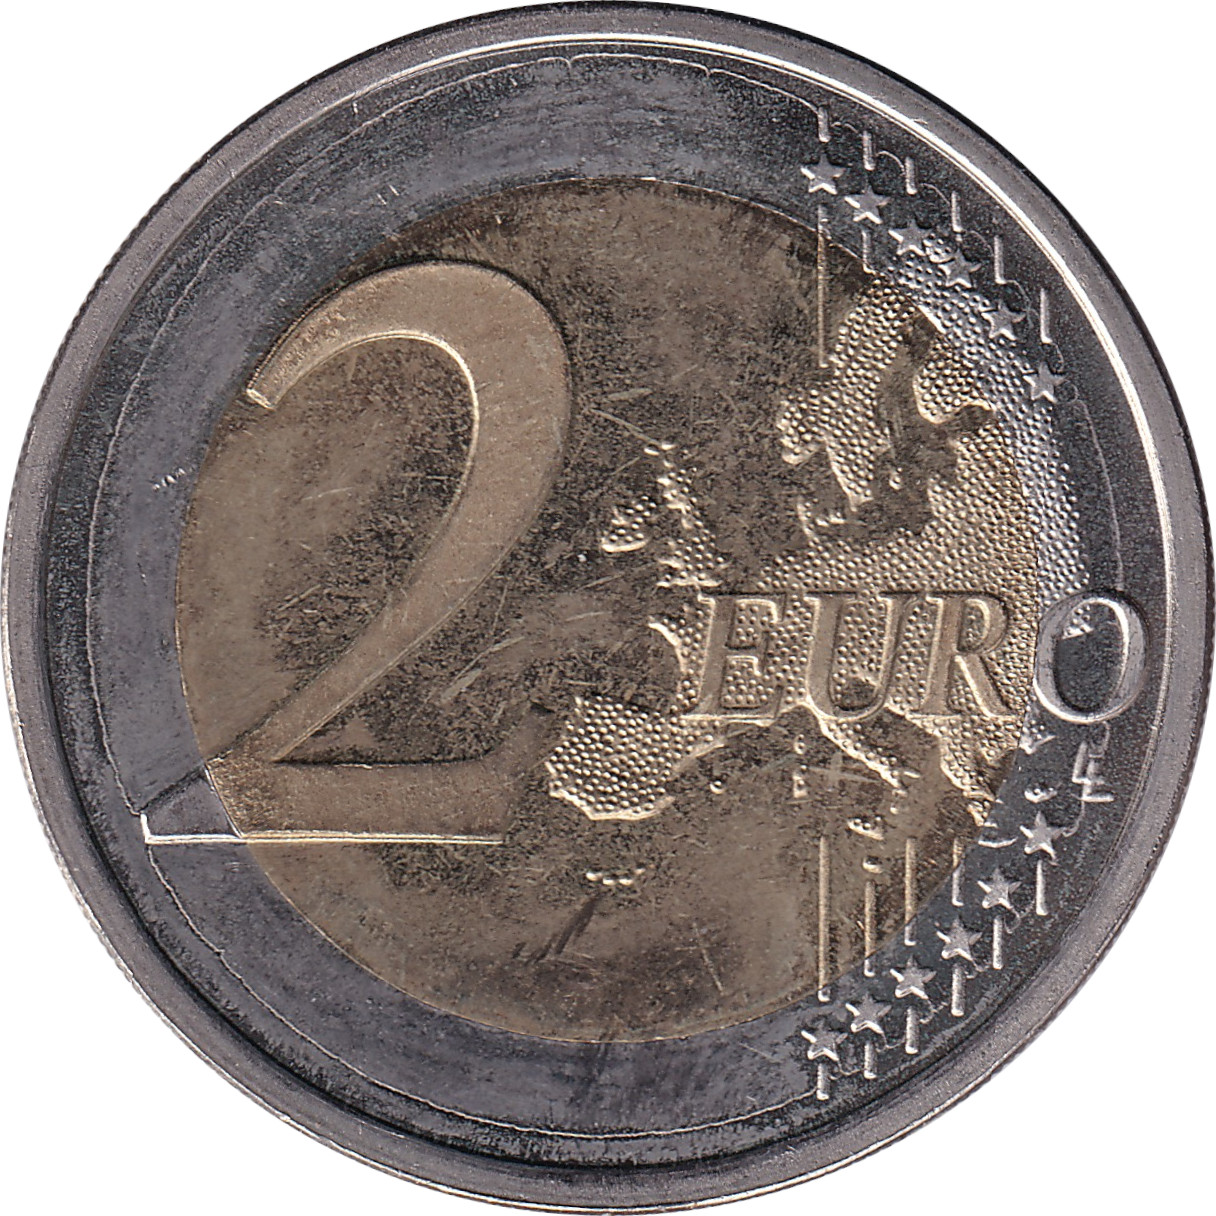 2 euro - Indépendance - 90 years